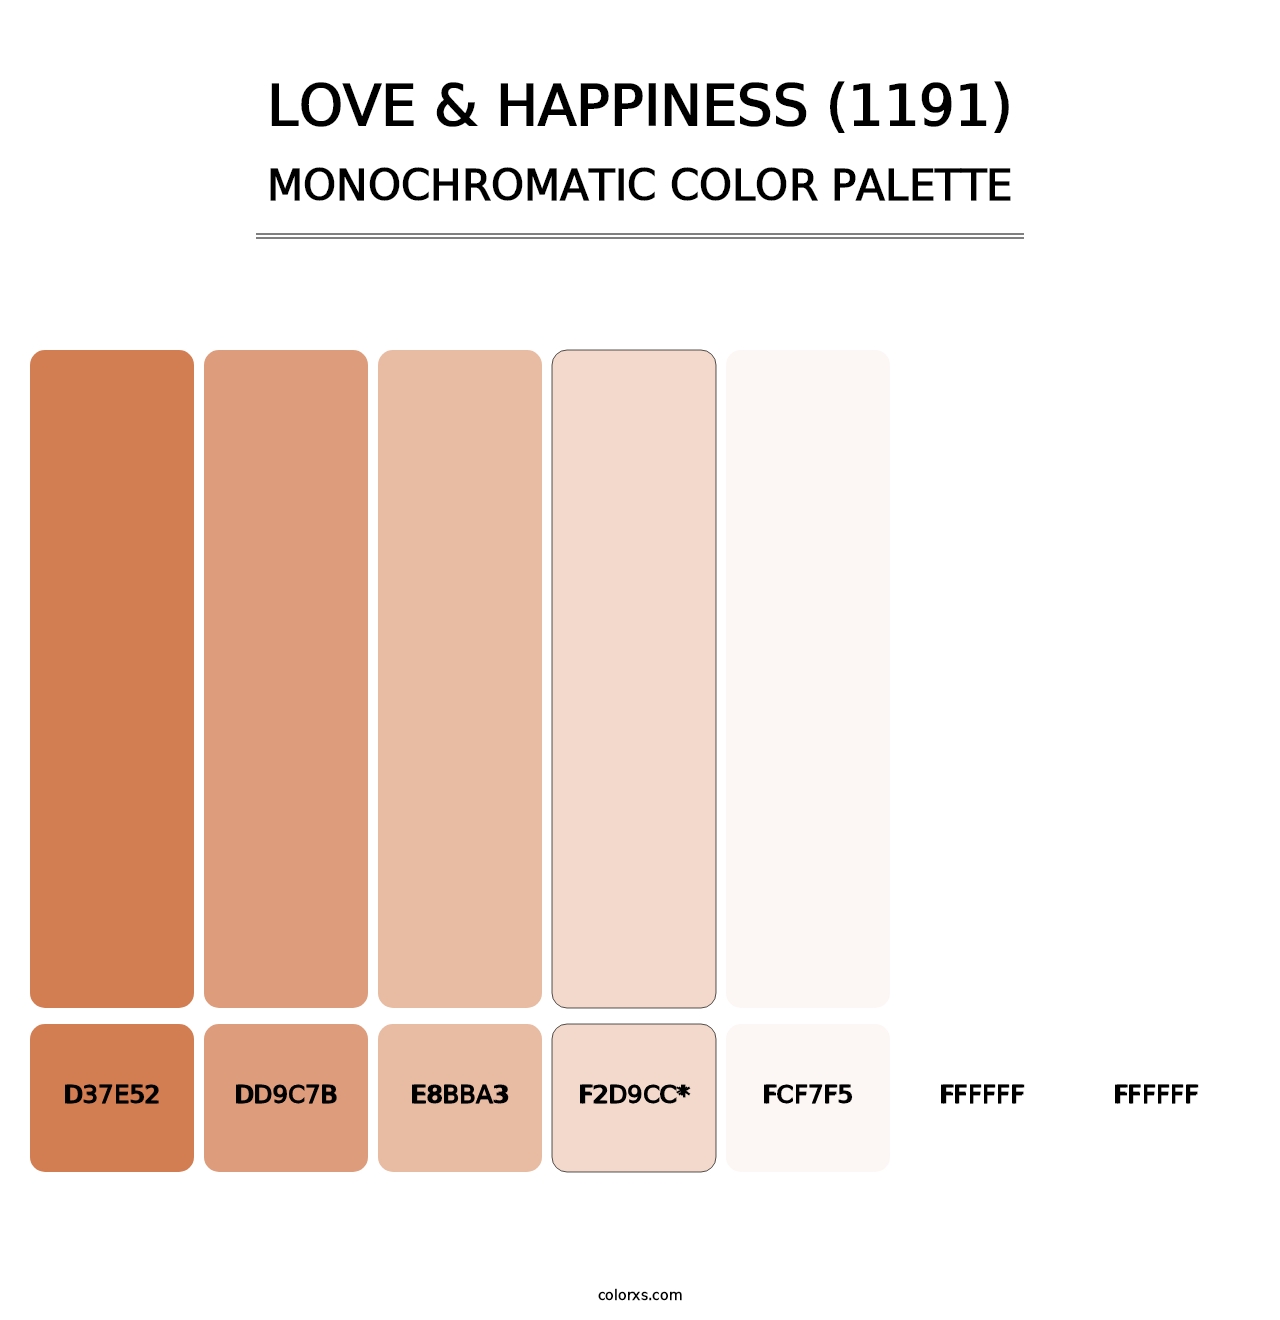 Love & Happiness (1191) - Monochromatic Color Palette